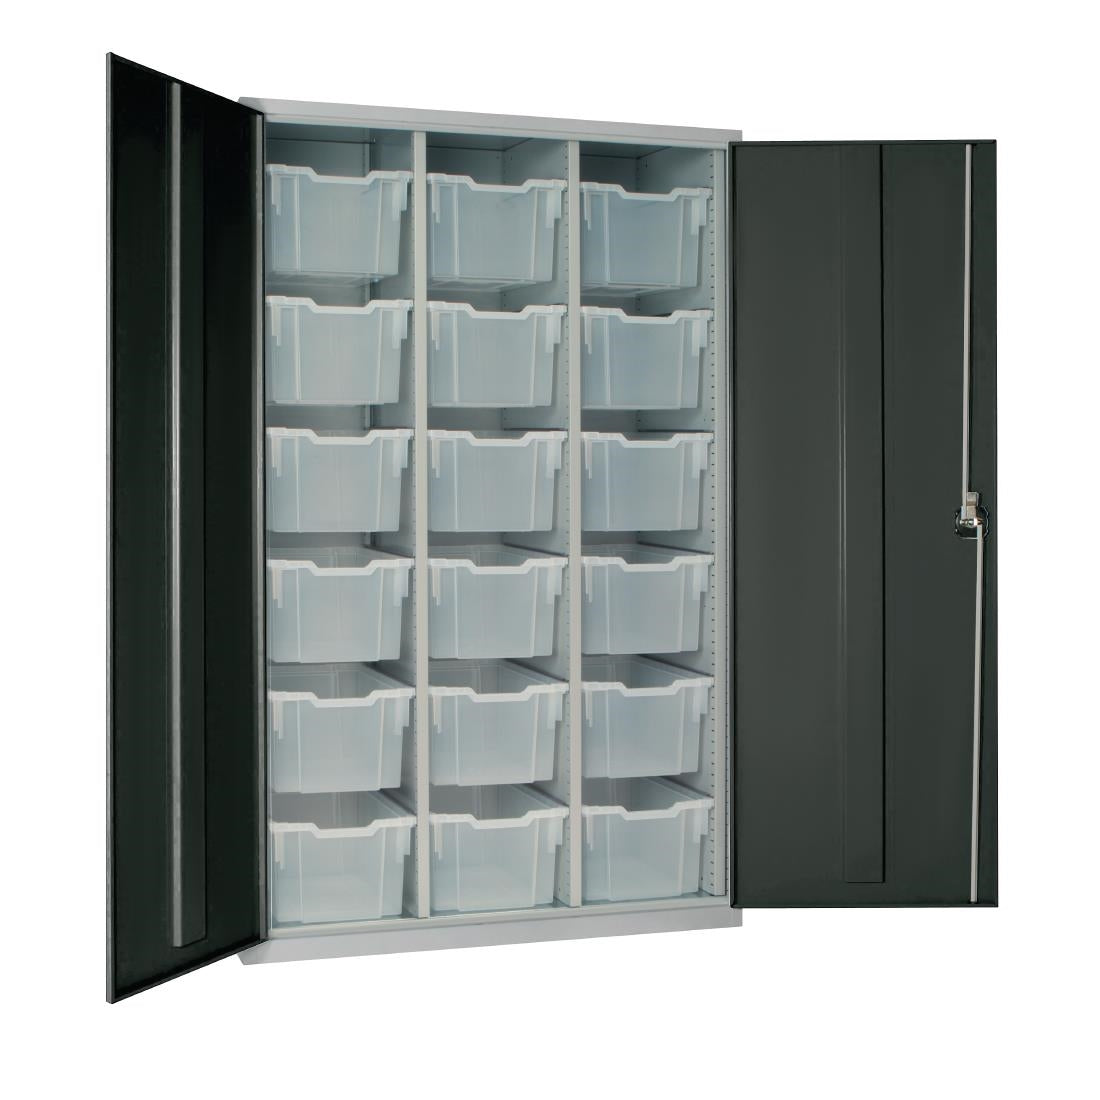 18 Tray High-Capacity Storage Cupboard - Dark Grey with Transparent Trays